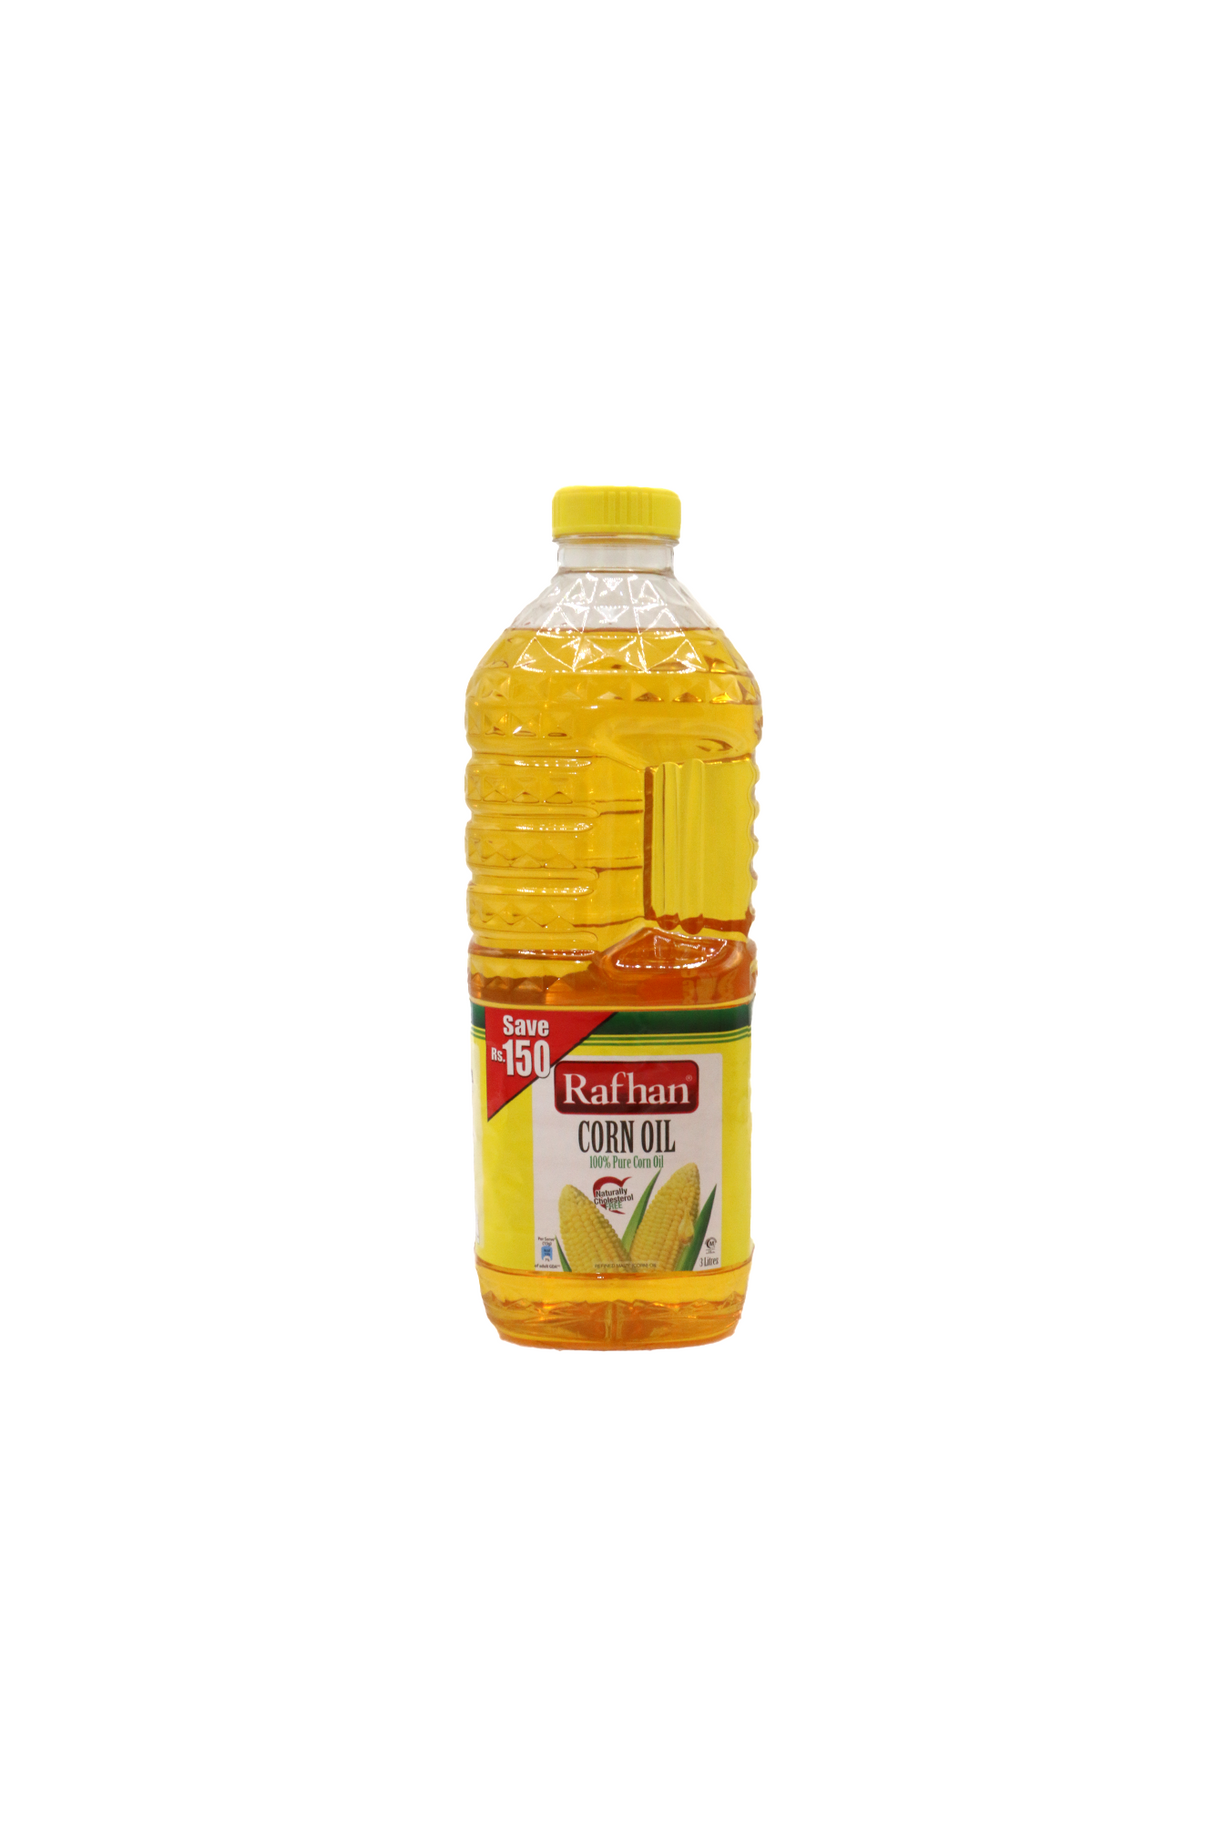 rafhan corn oil 3l bottle